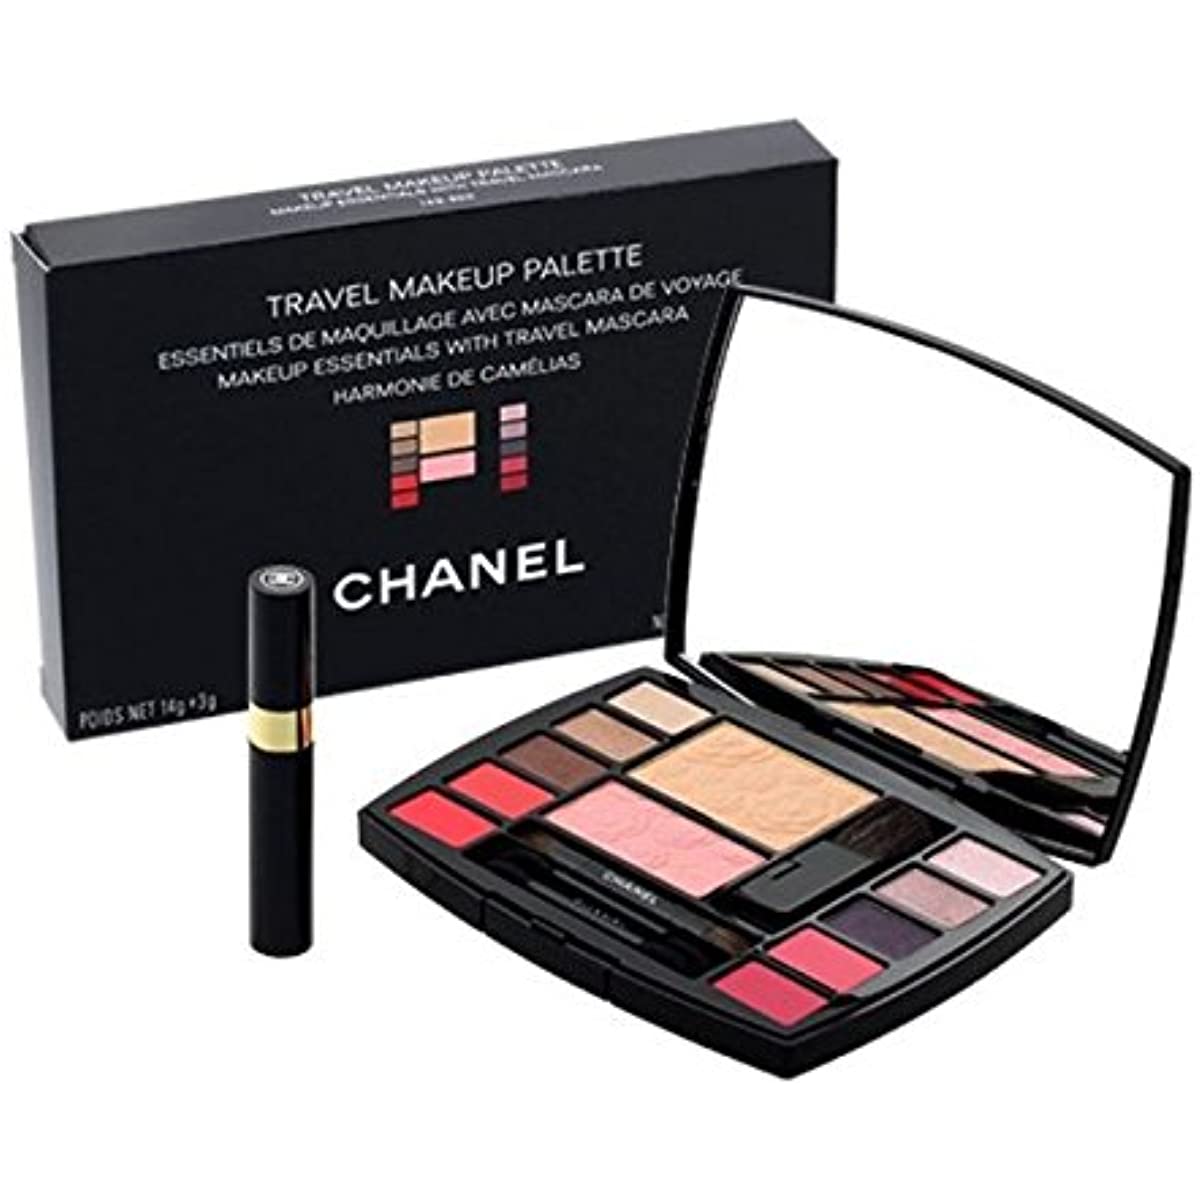 CHANEL Travel Makeup Palette DESTINATION Makeup Essentials with Travel  Mascara